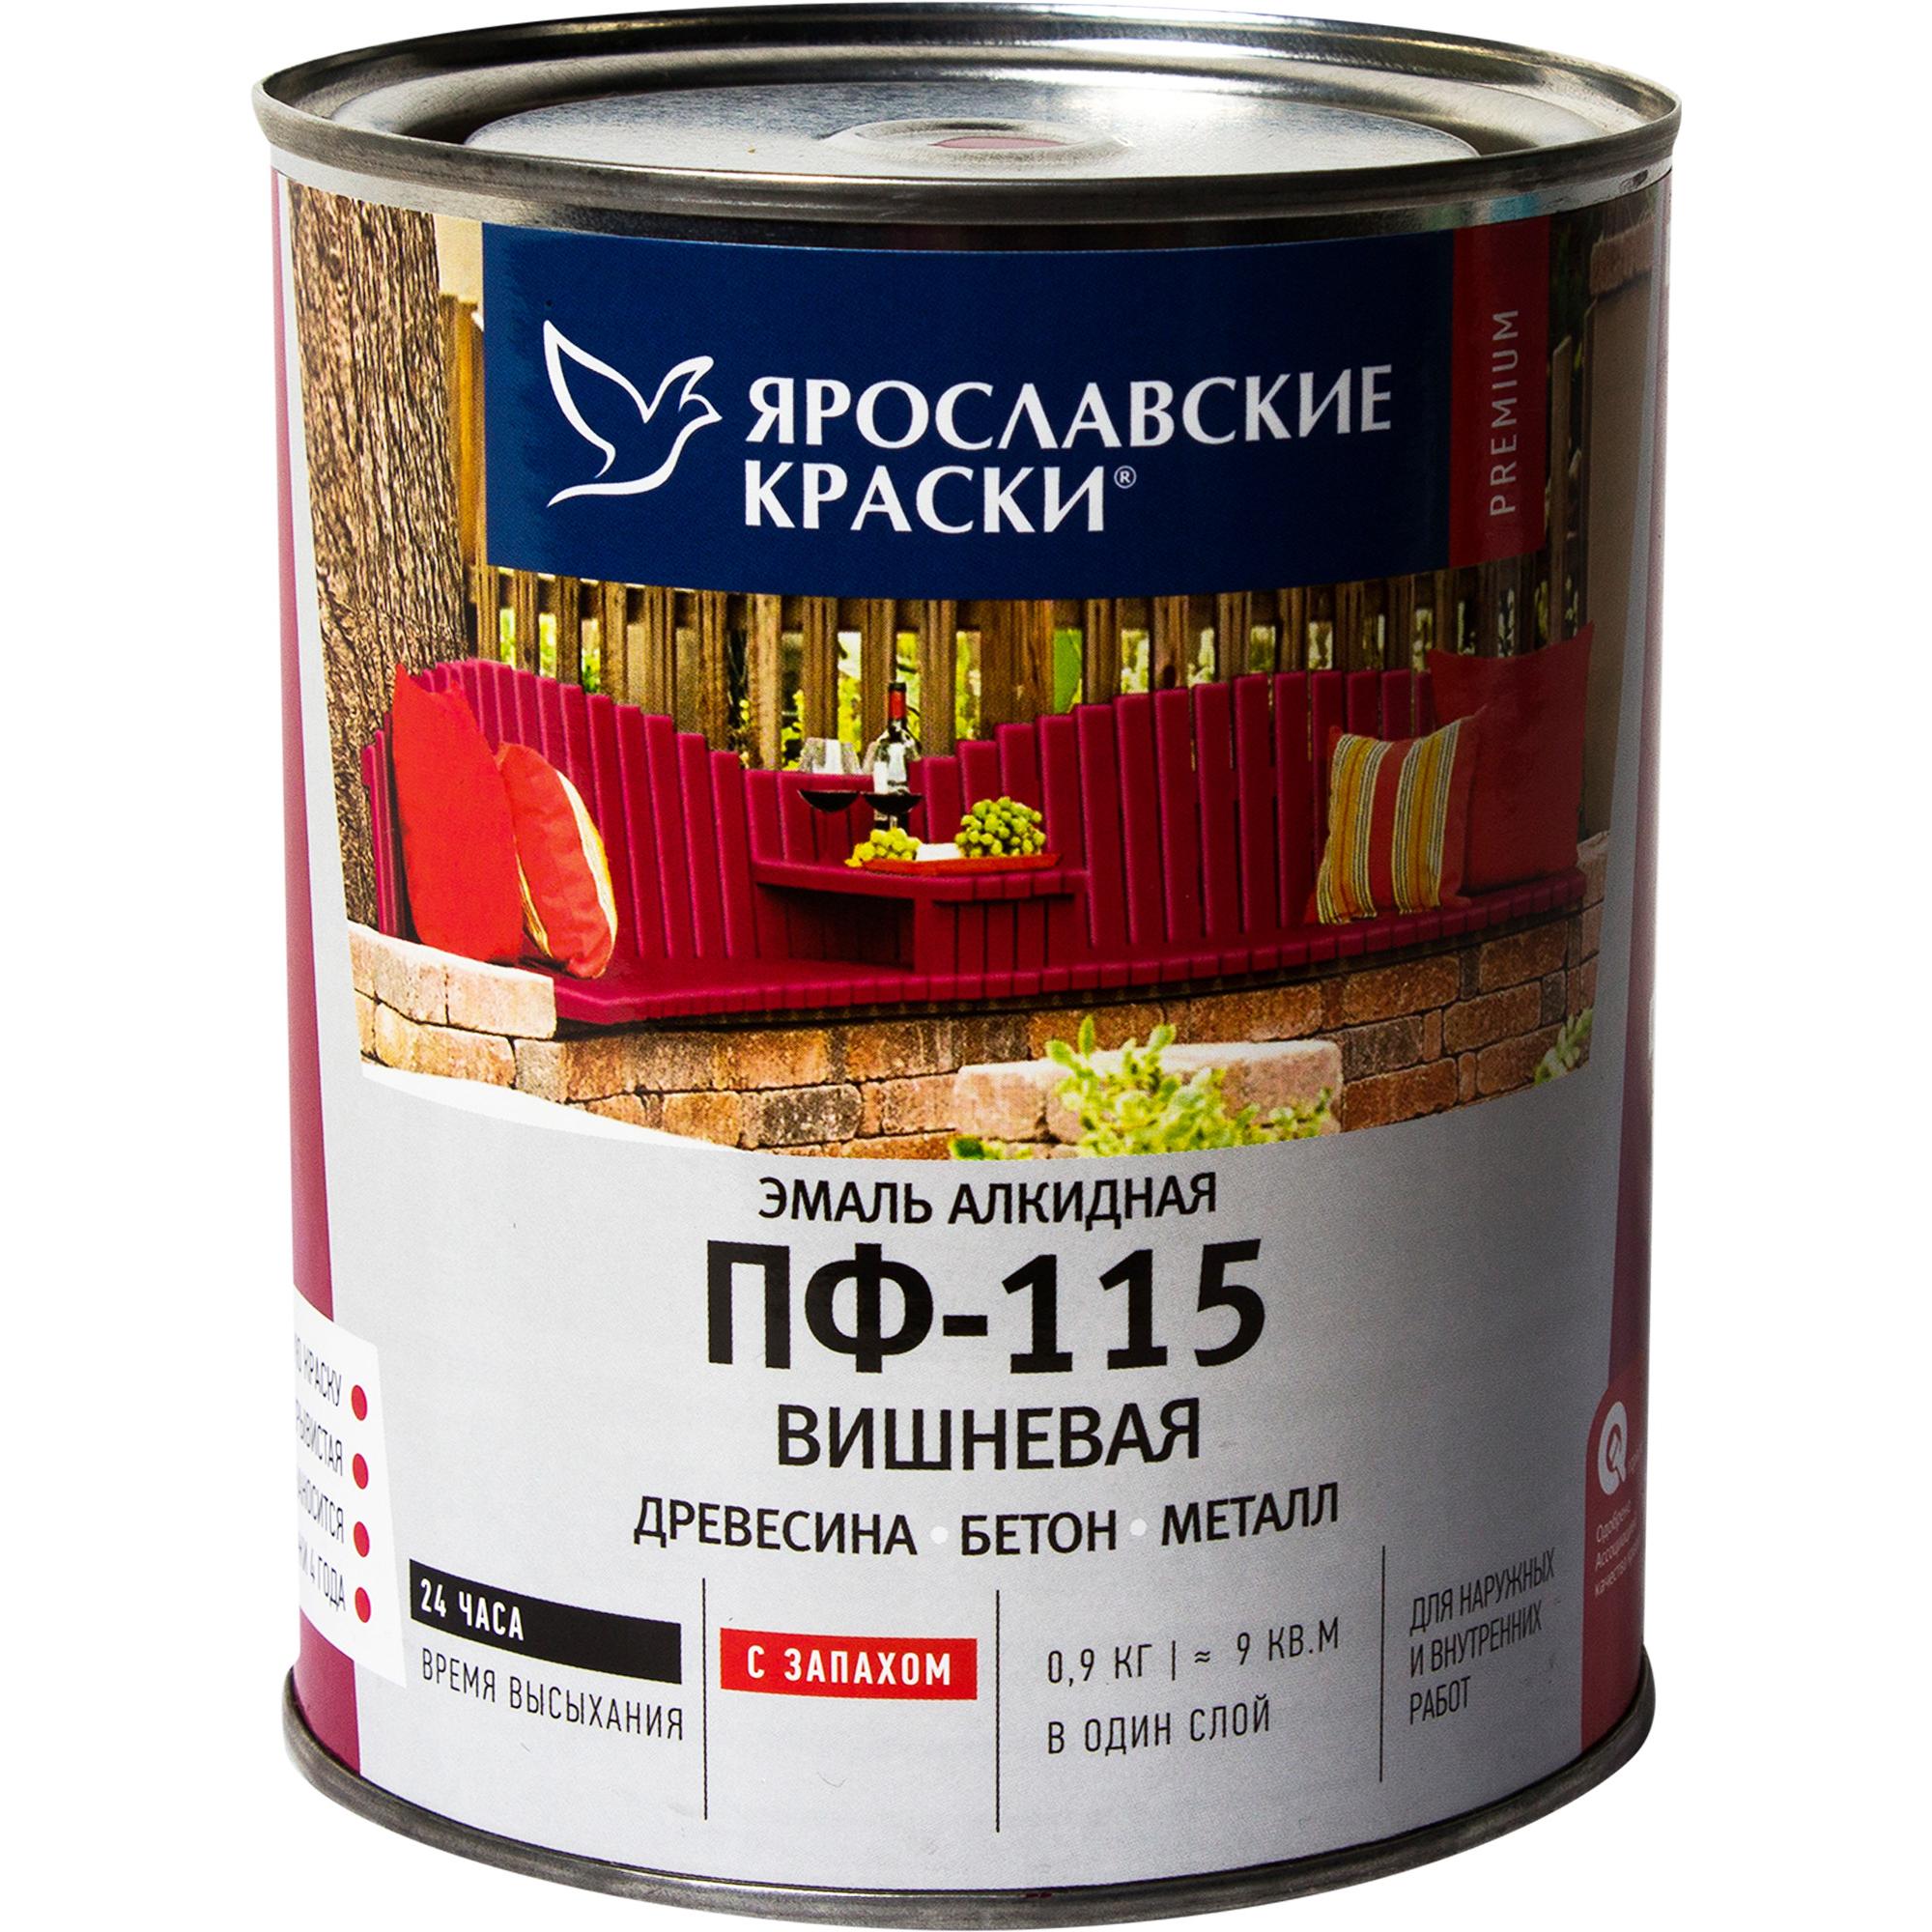  Ярославские краски ПФ-115 глянцевая цвет вишнёвый 0.9 кг –  .